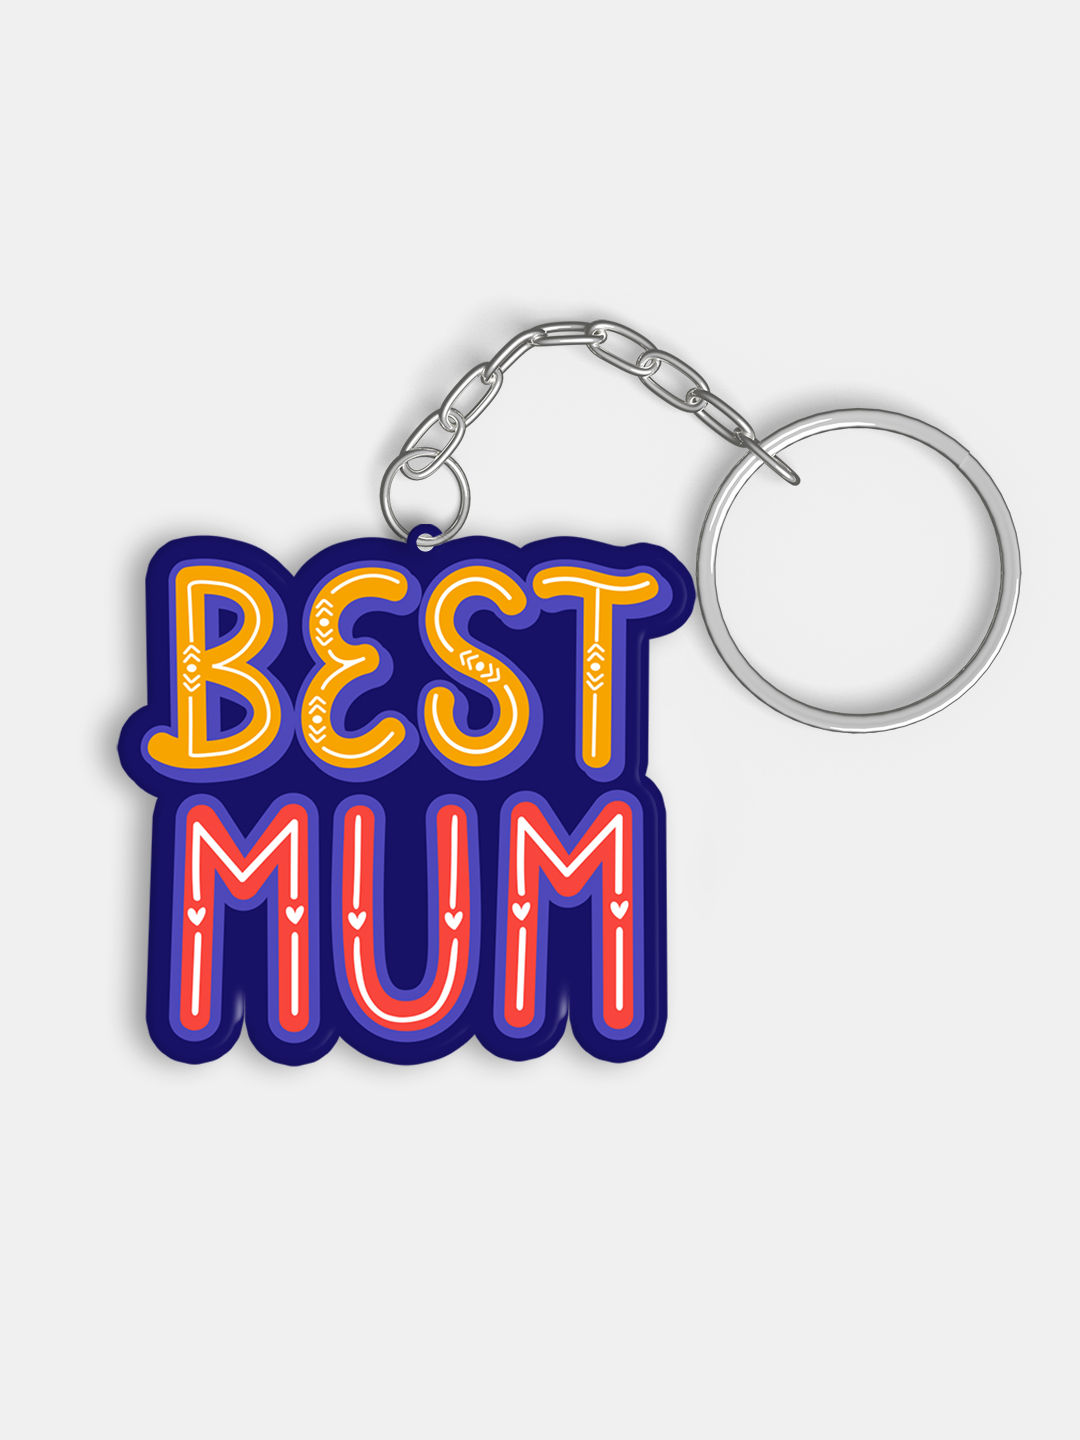 Buy Best mum - Acrylic Keychains Keychains Online